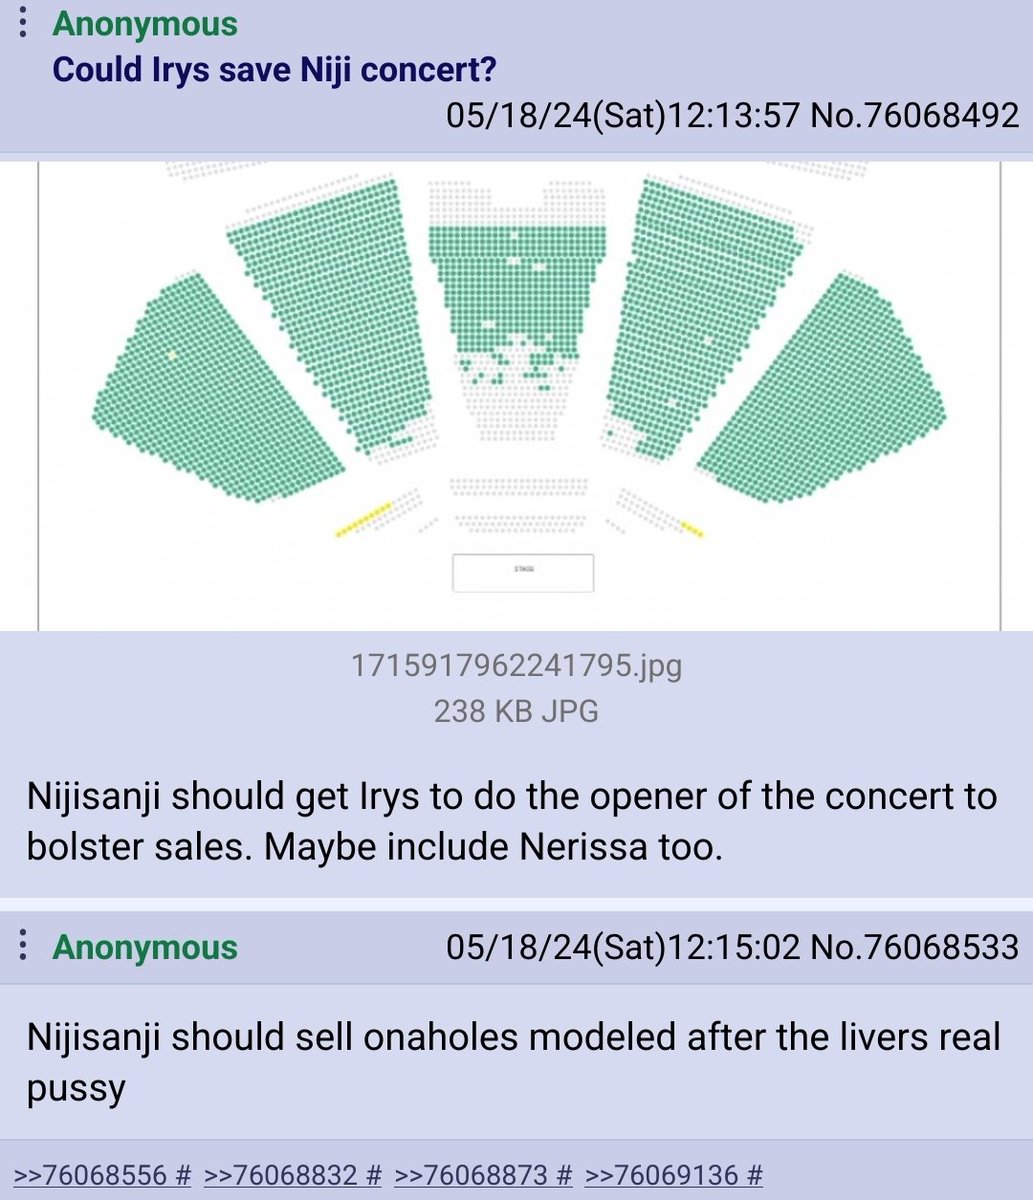 Anon wants to save Nijisanji